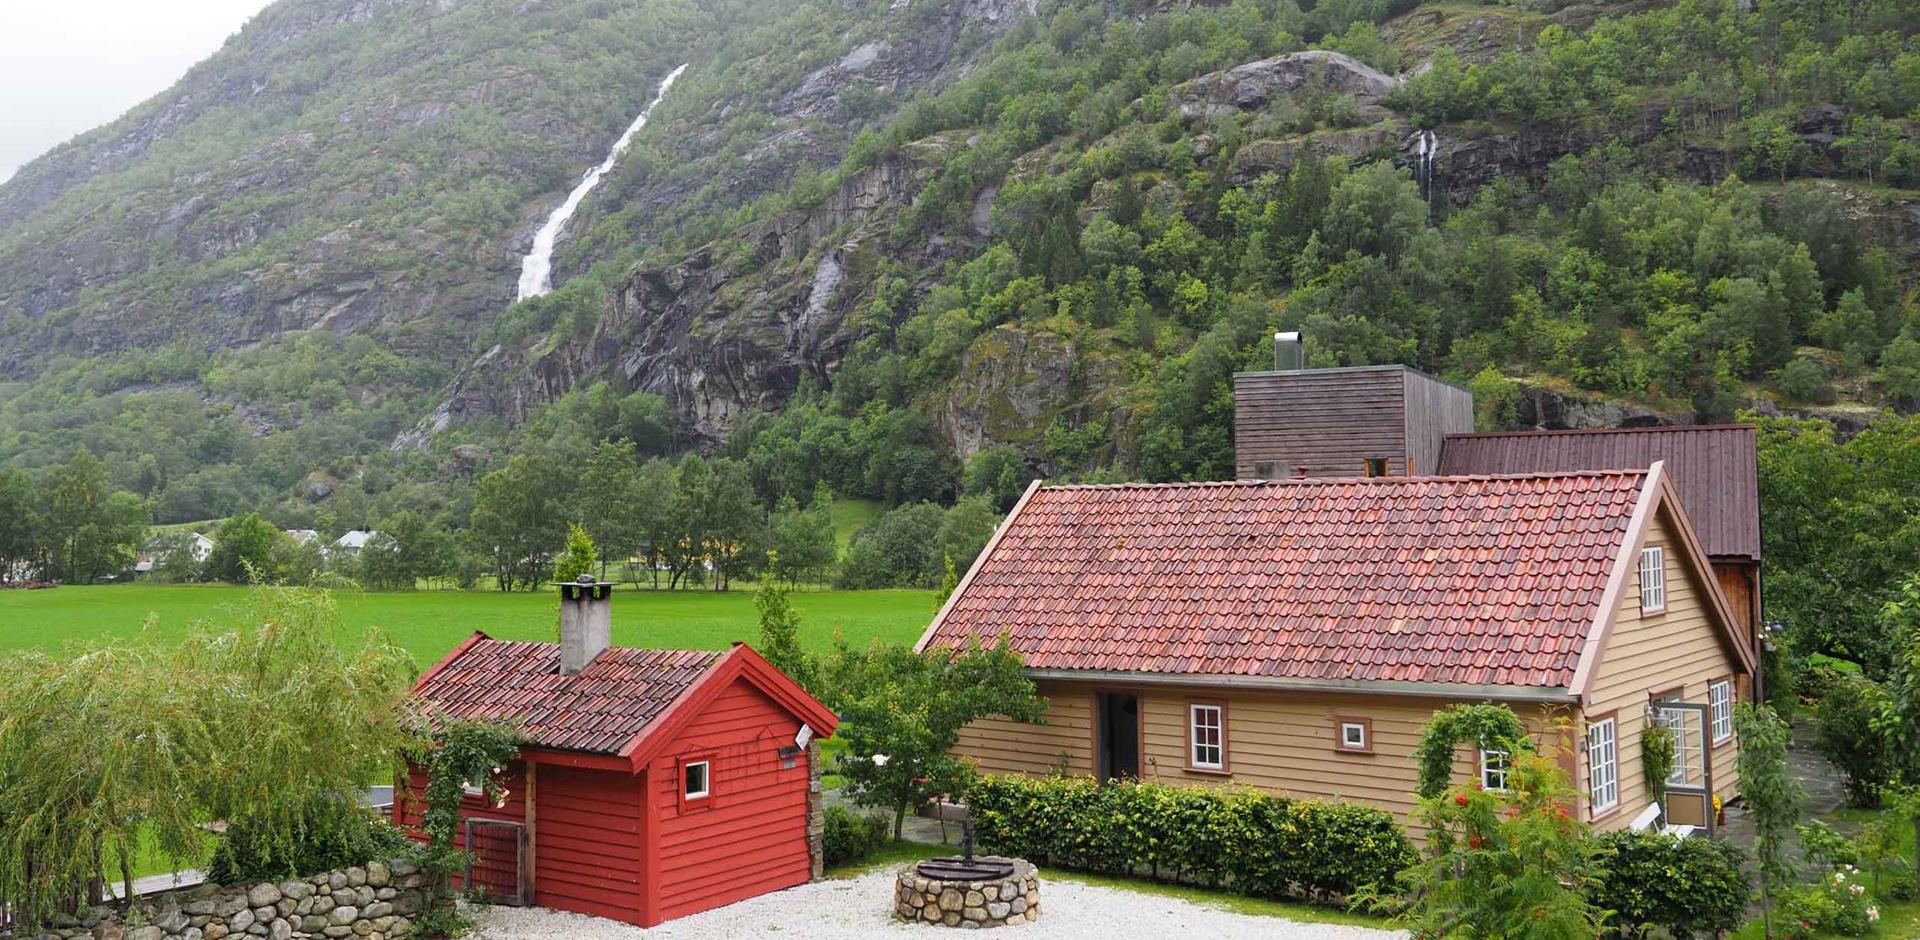 Fisherman's cabin, 29|2 Aurland, Norway